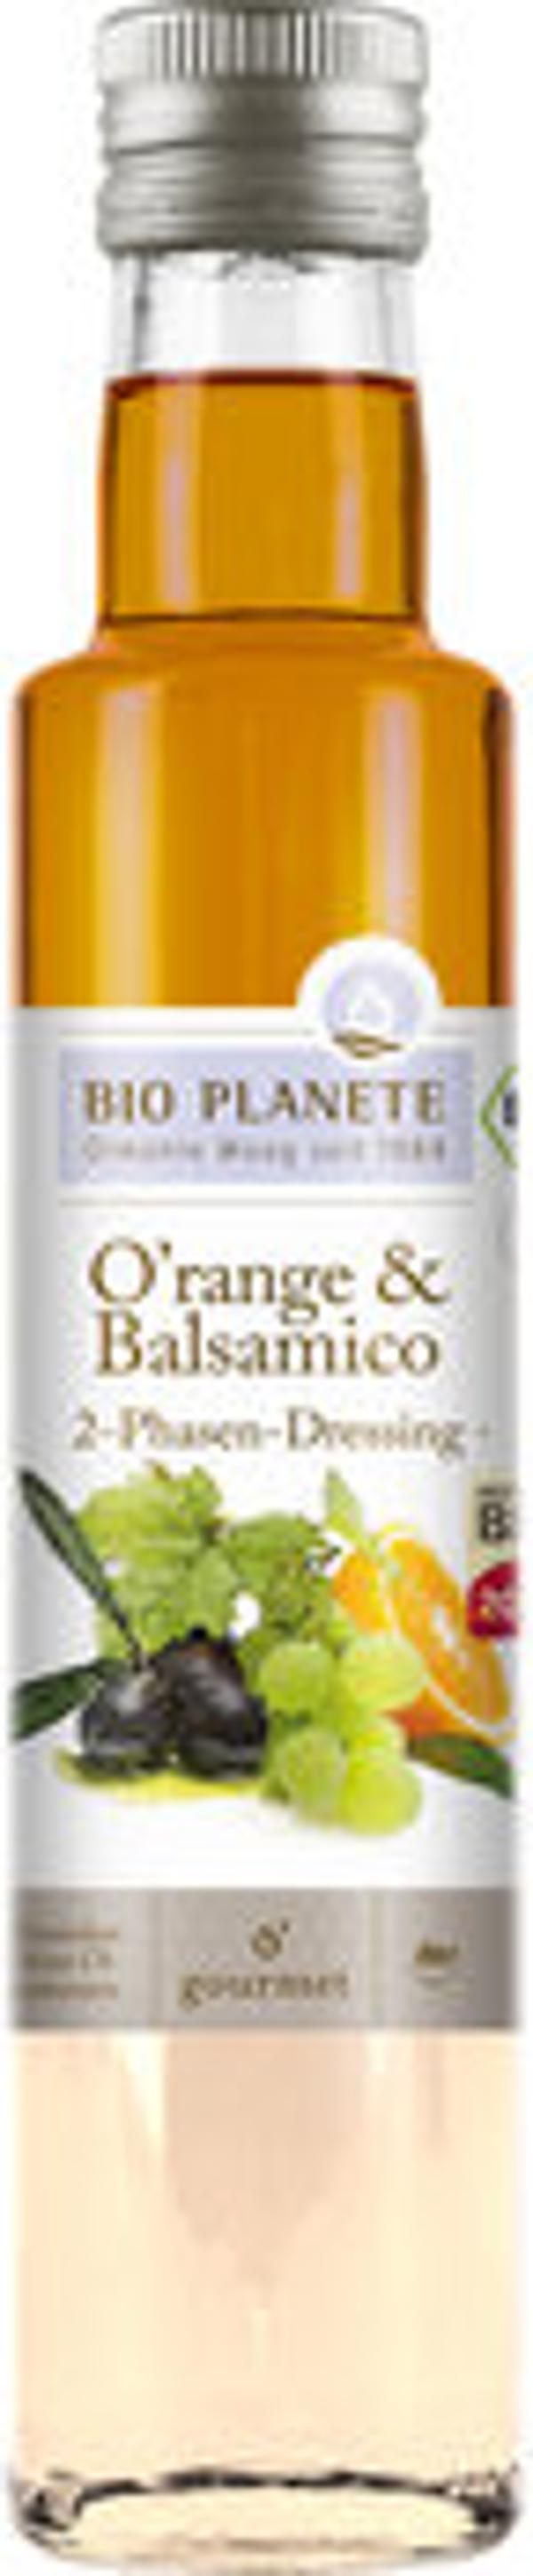 Produktfoto zu Bio Planète O'range und Balsamico Dressing 250ml